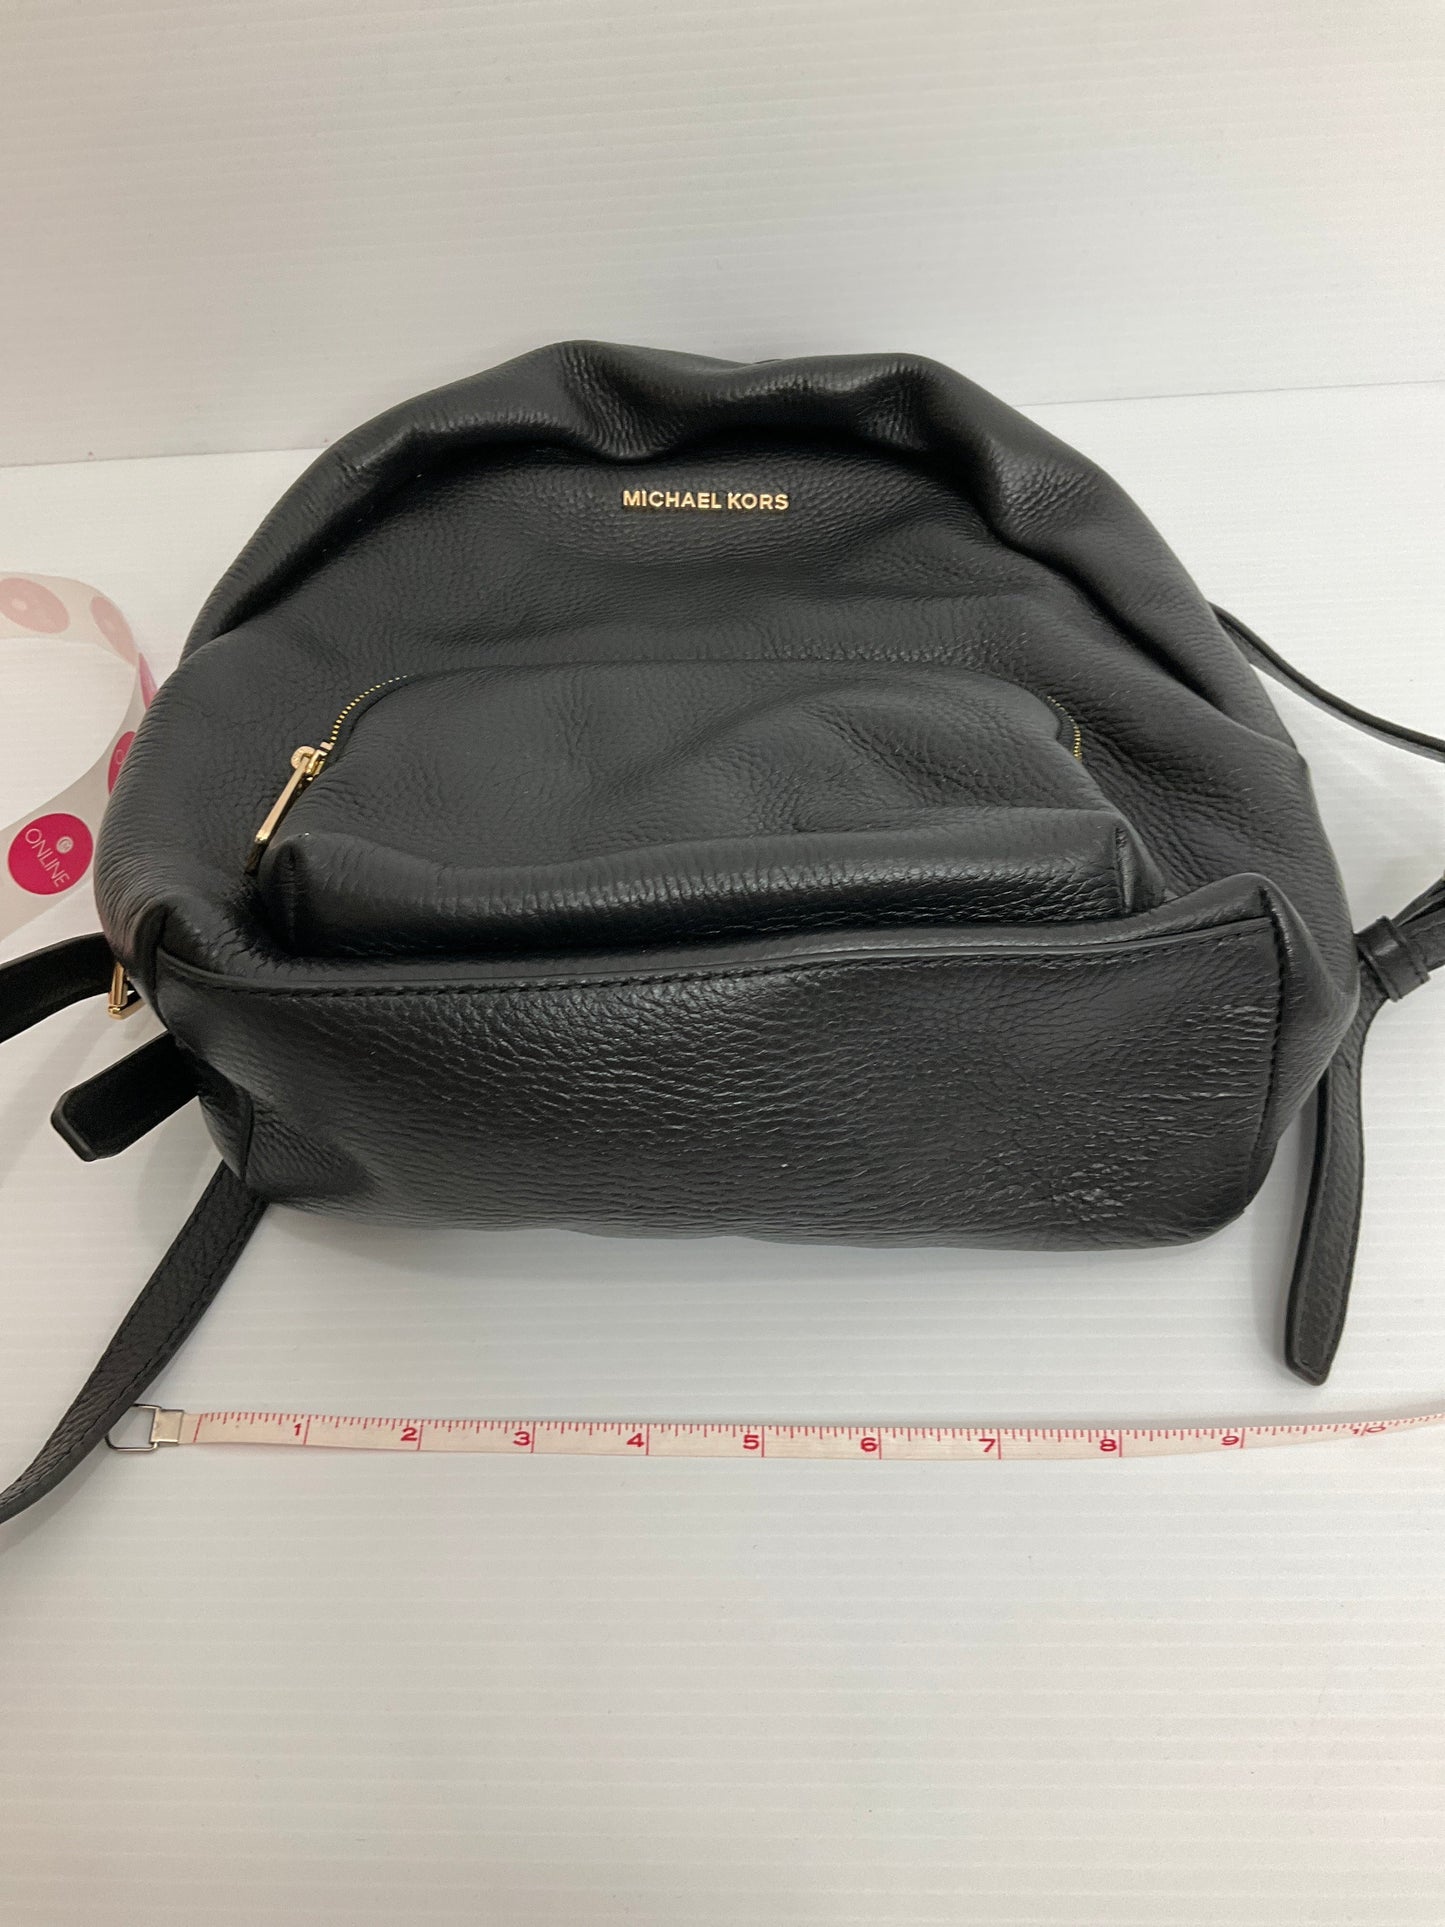 Backpack Michael Kors, Size Medium